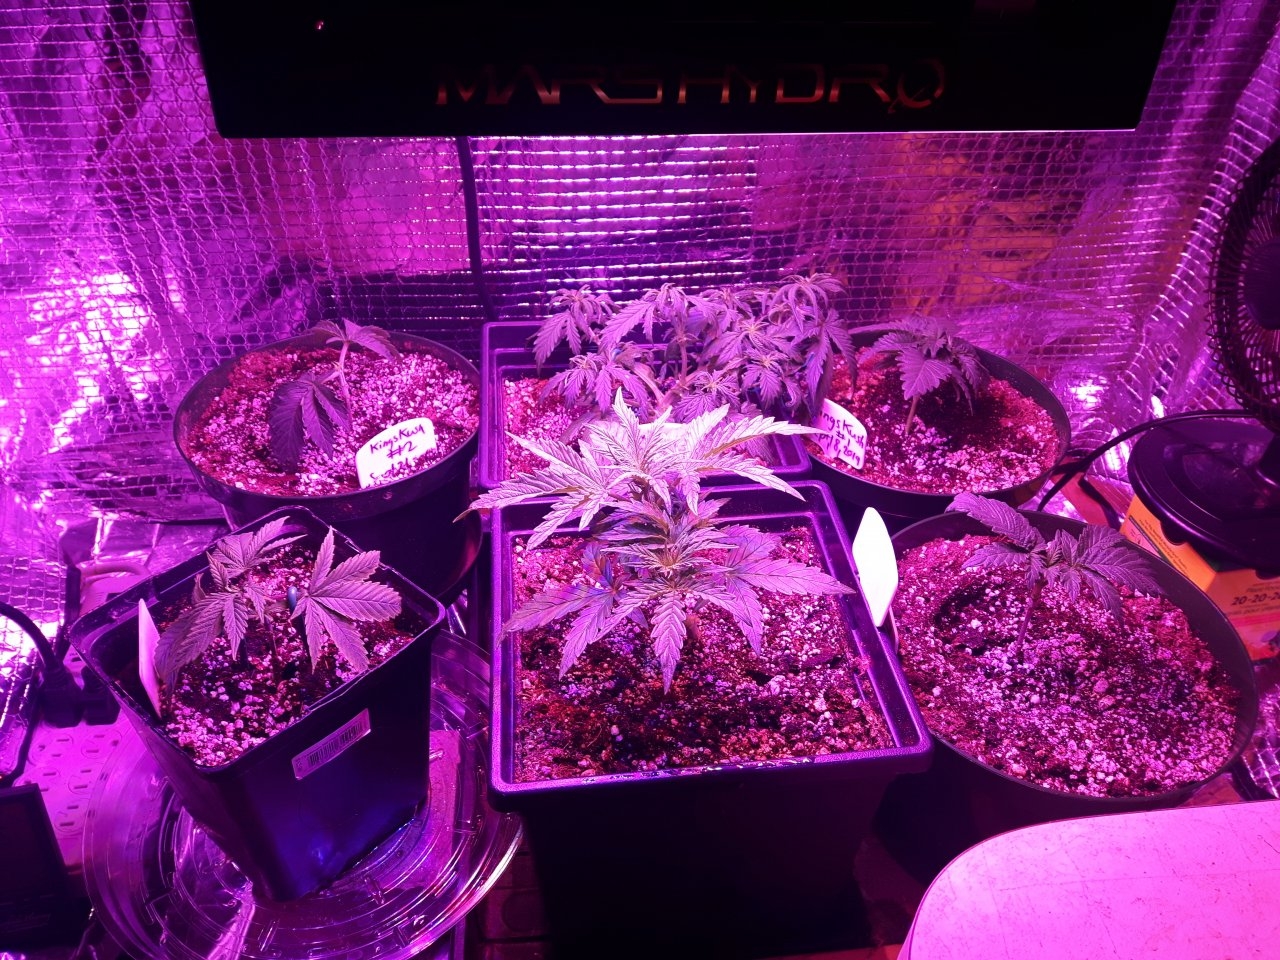 The grow room